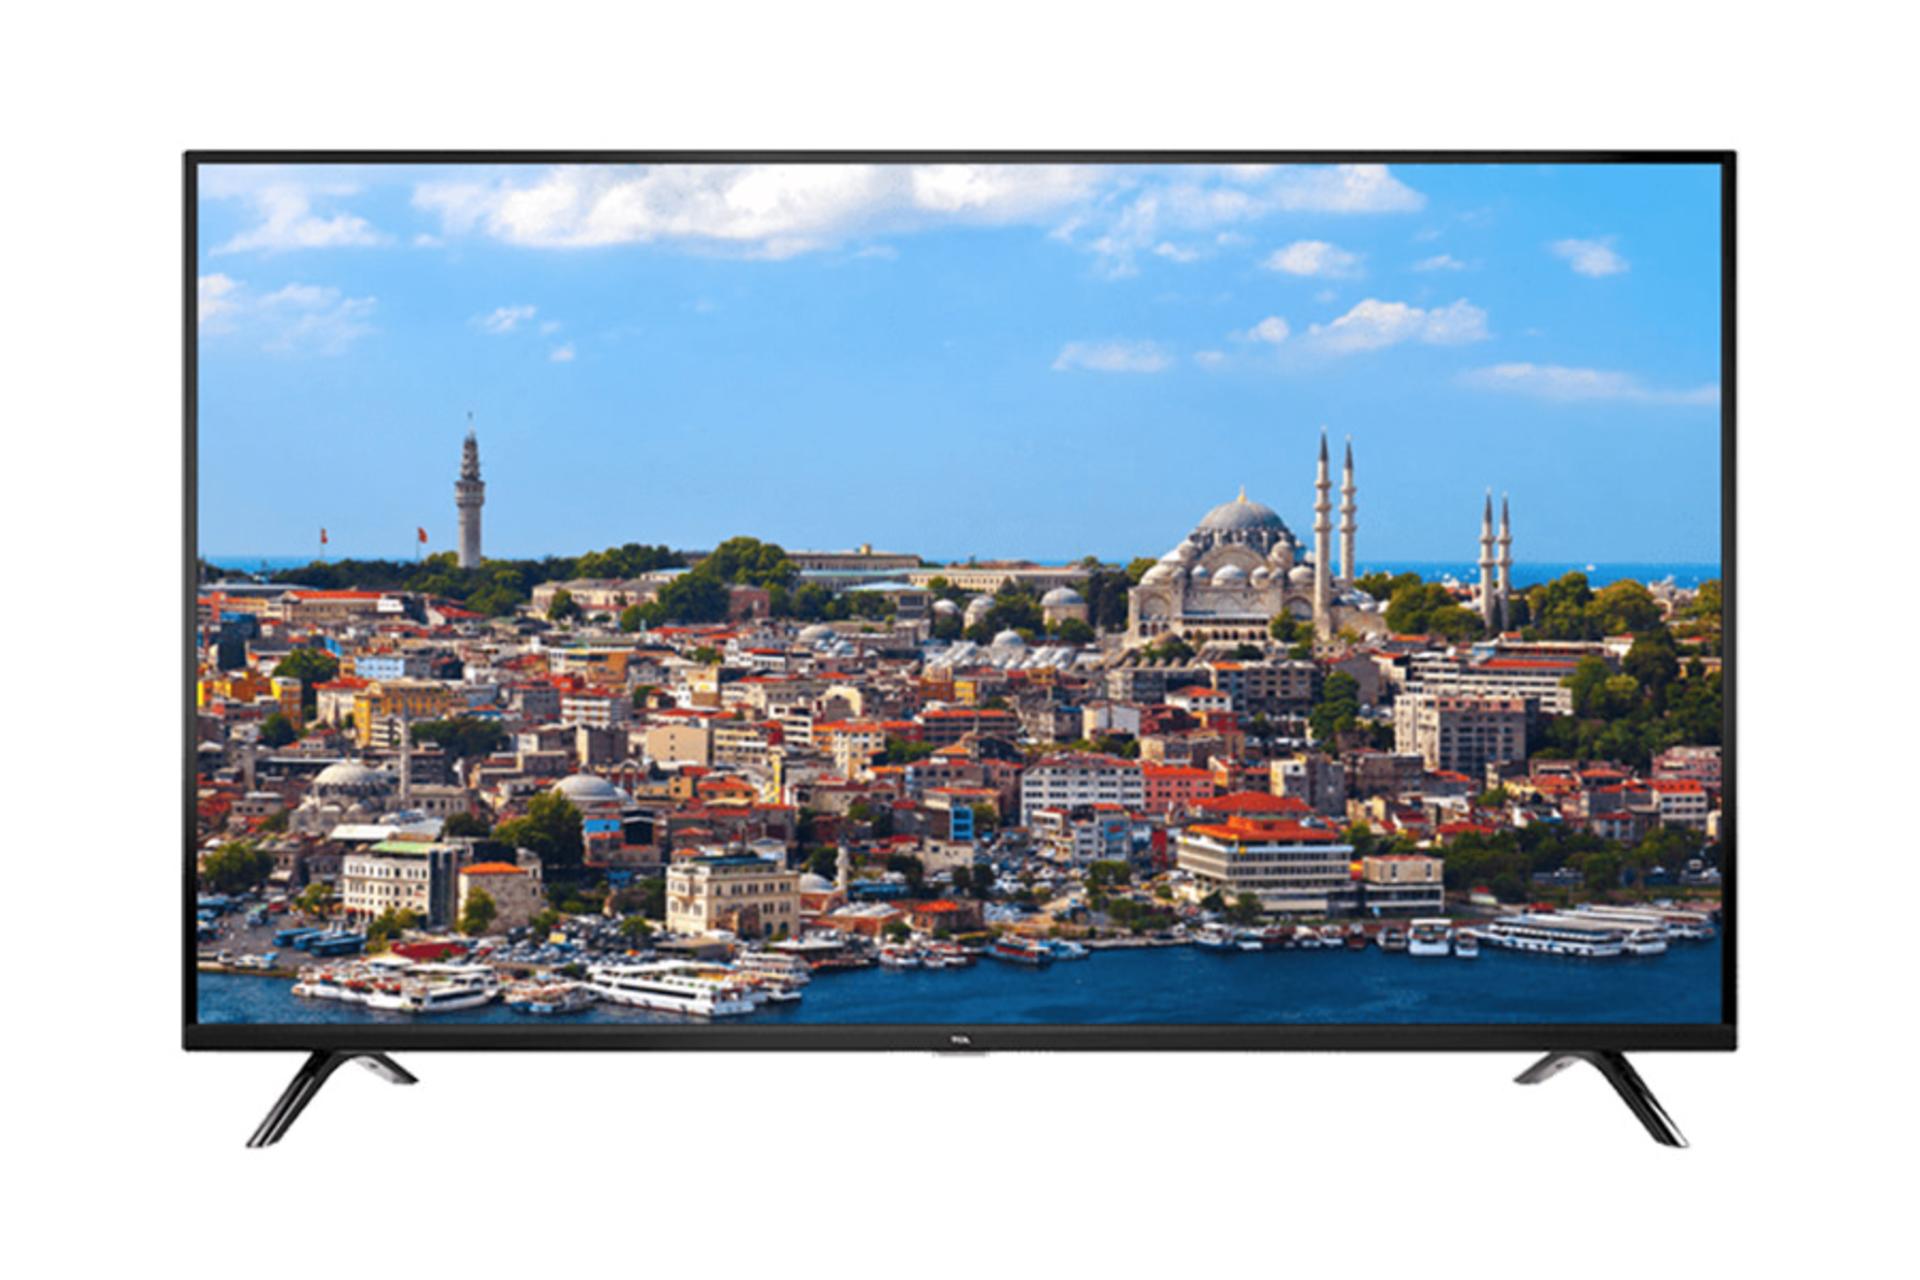 قیمت تلویزیون تی سی ال 43D3000i مدل 43 اینچ + مشخصات